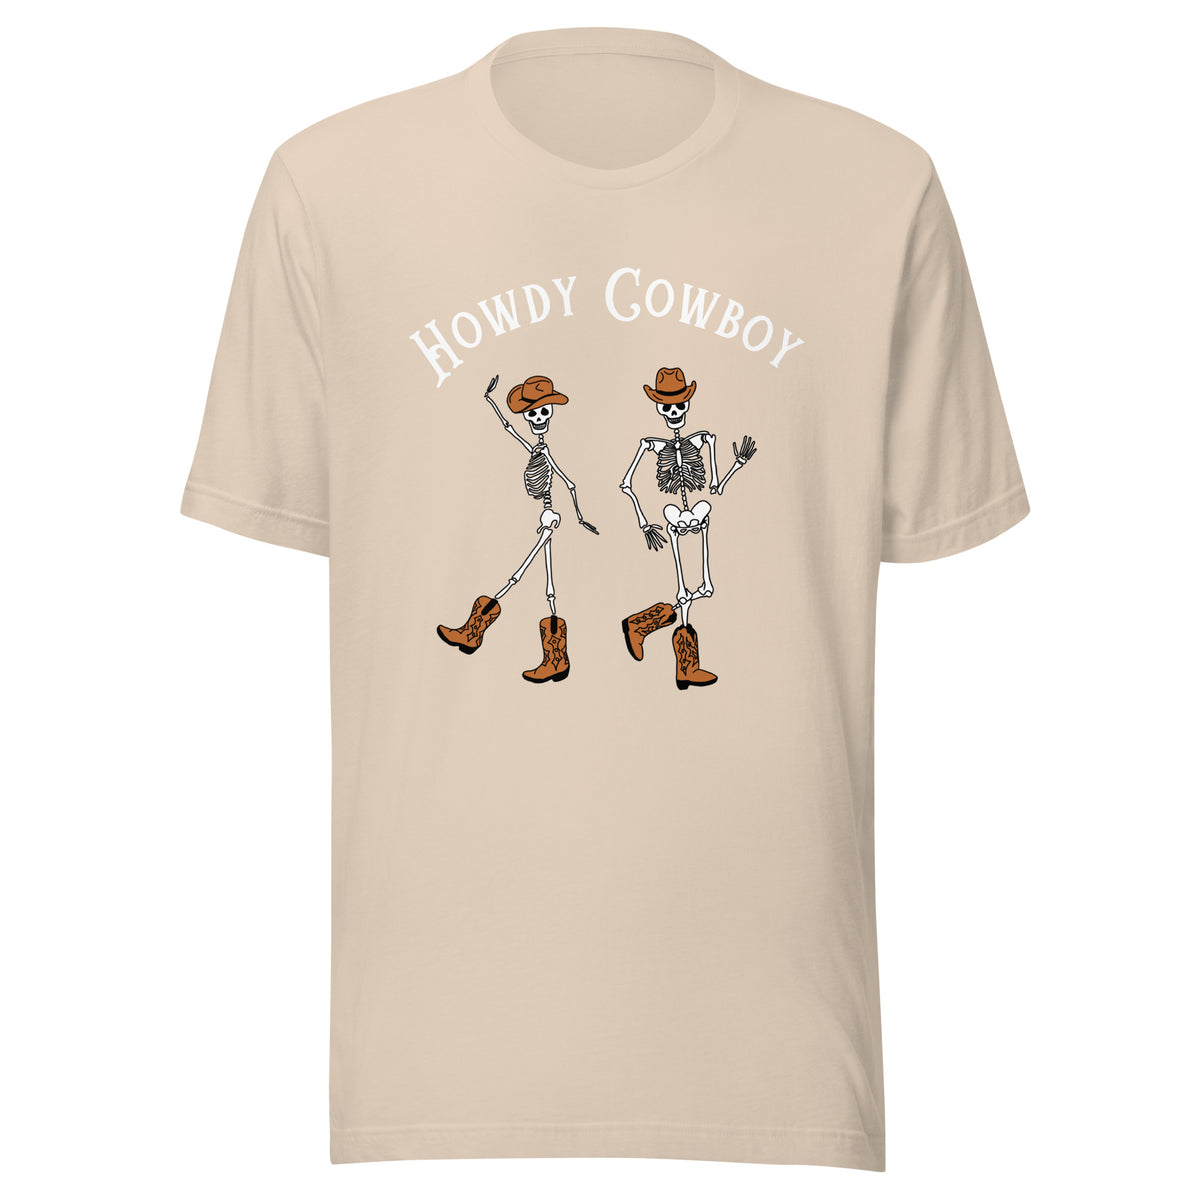 Howdy Cowboy t-shirt